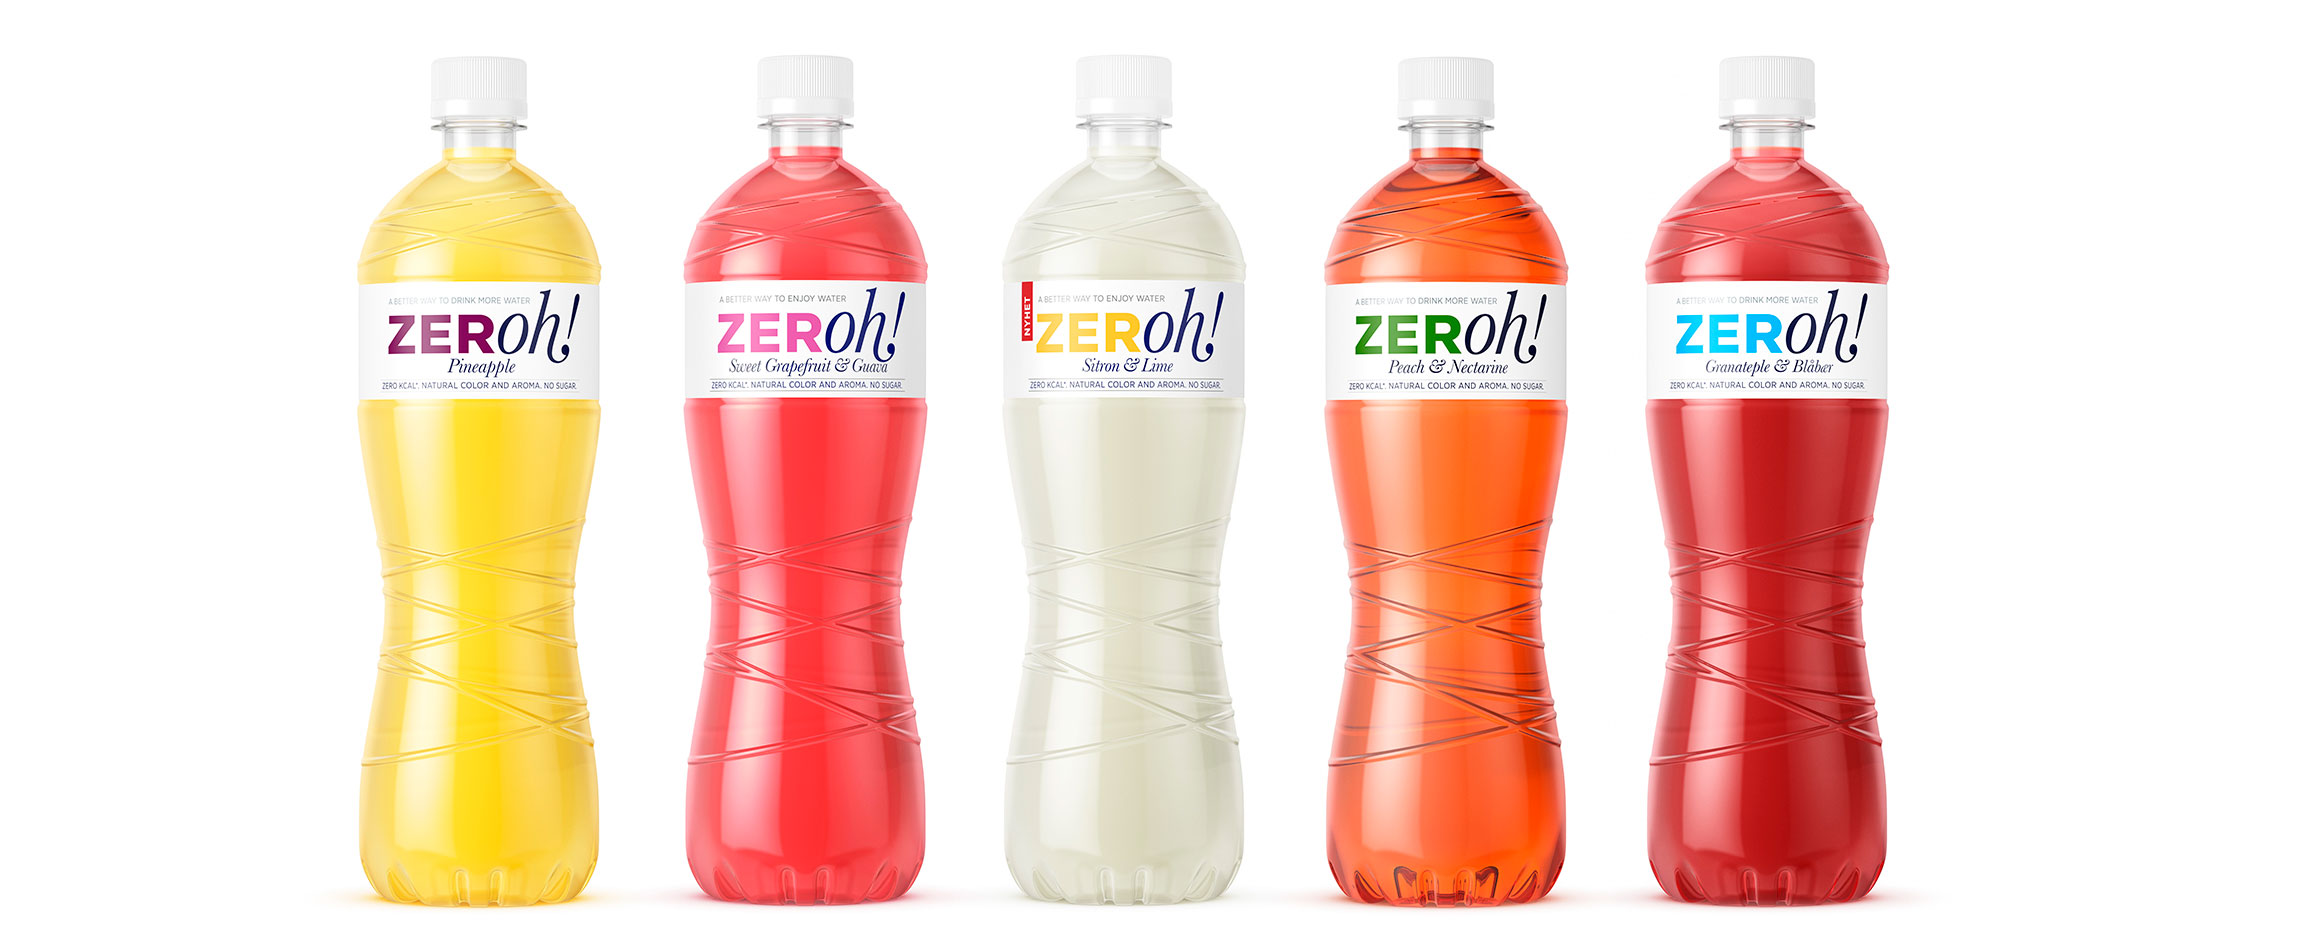 Lerum Zeroh saft cordial range utvalg. Emballasje packaging design.